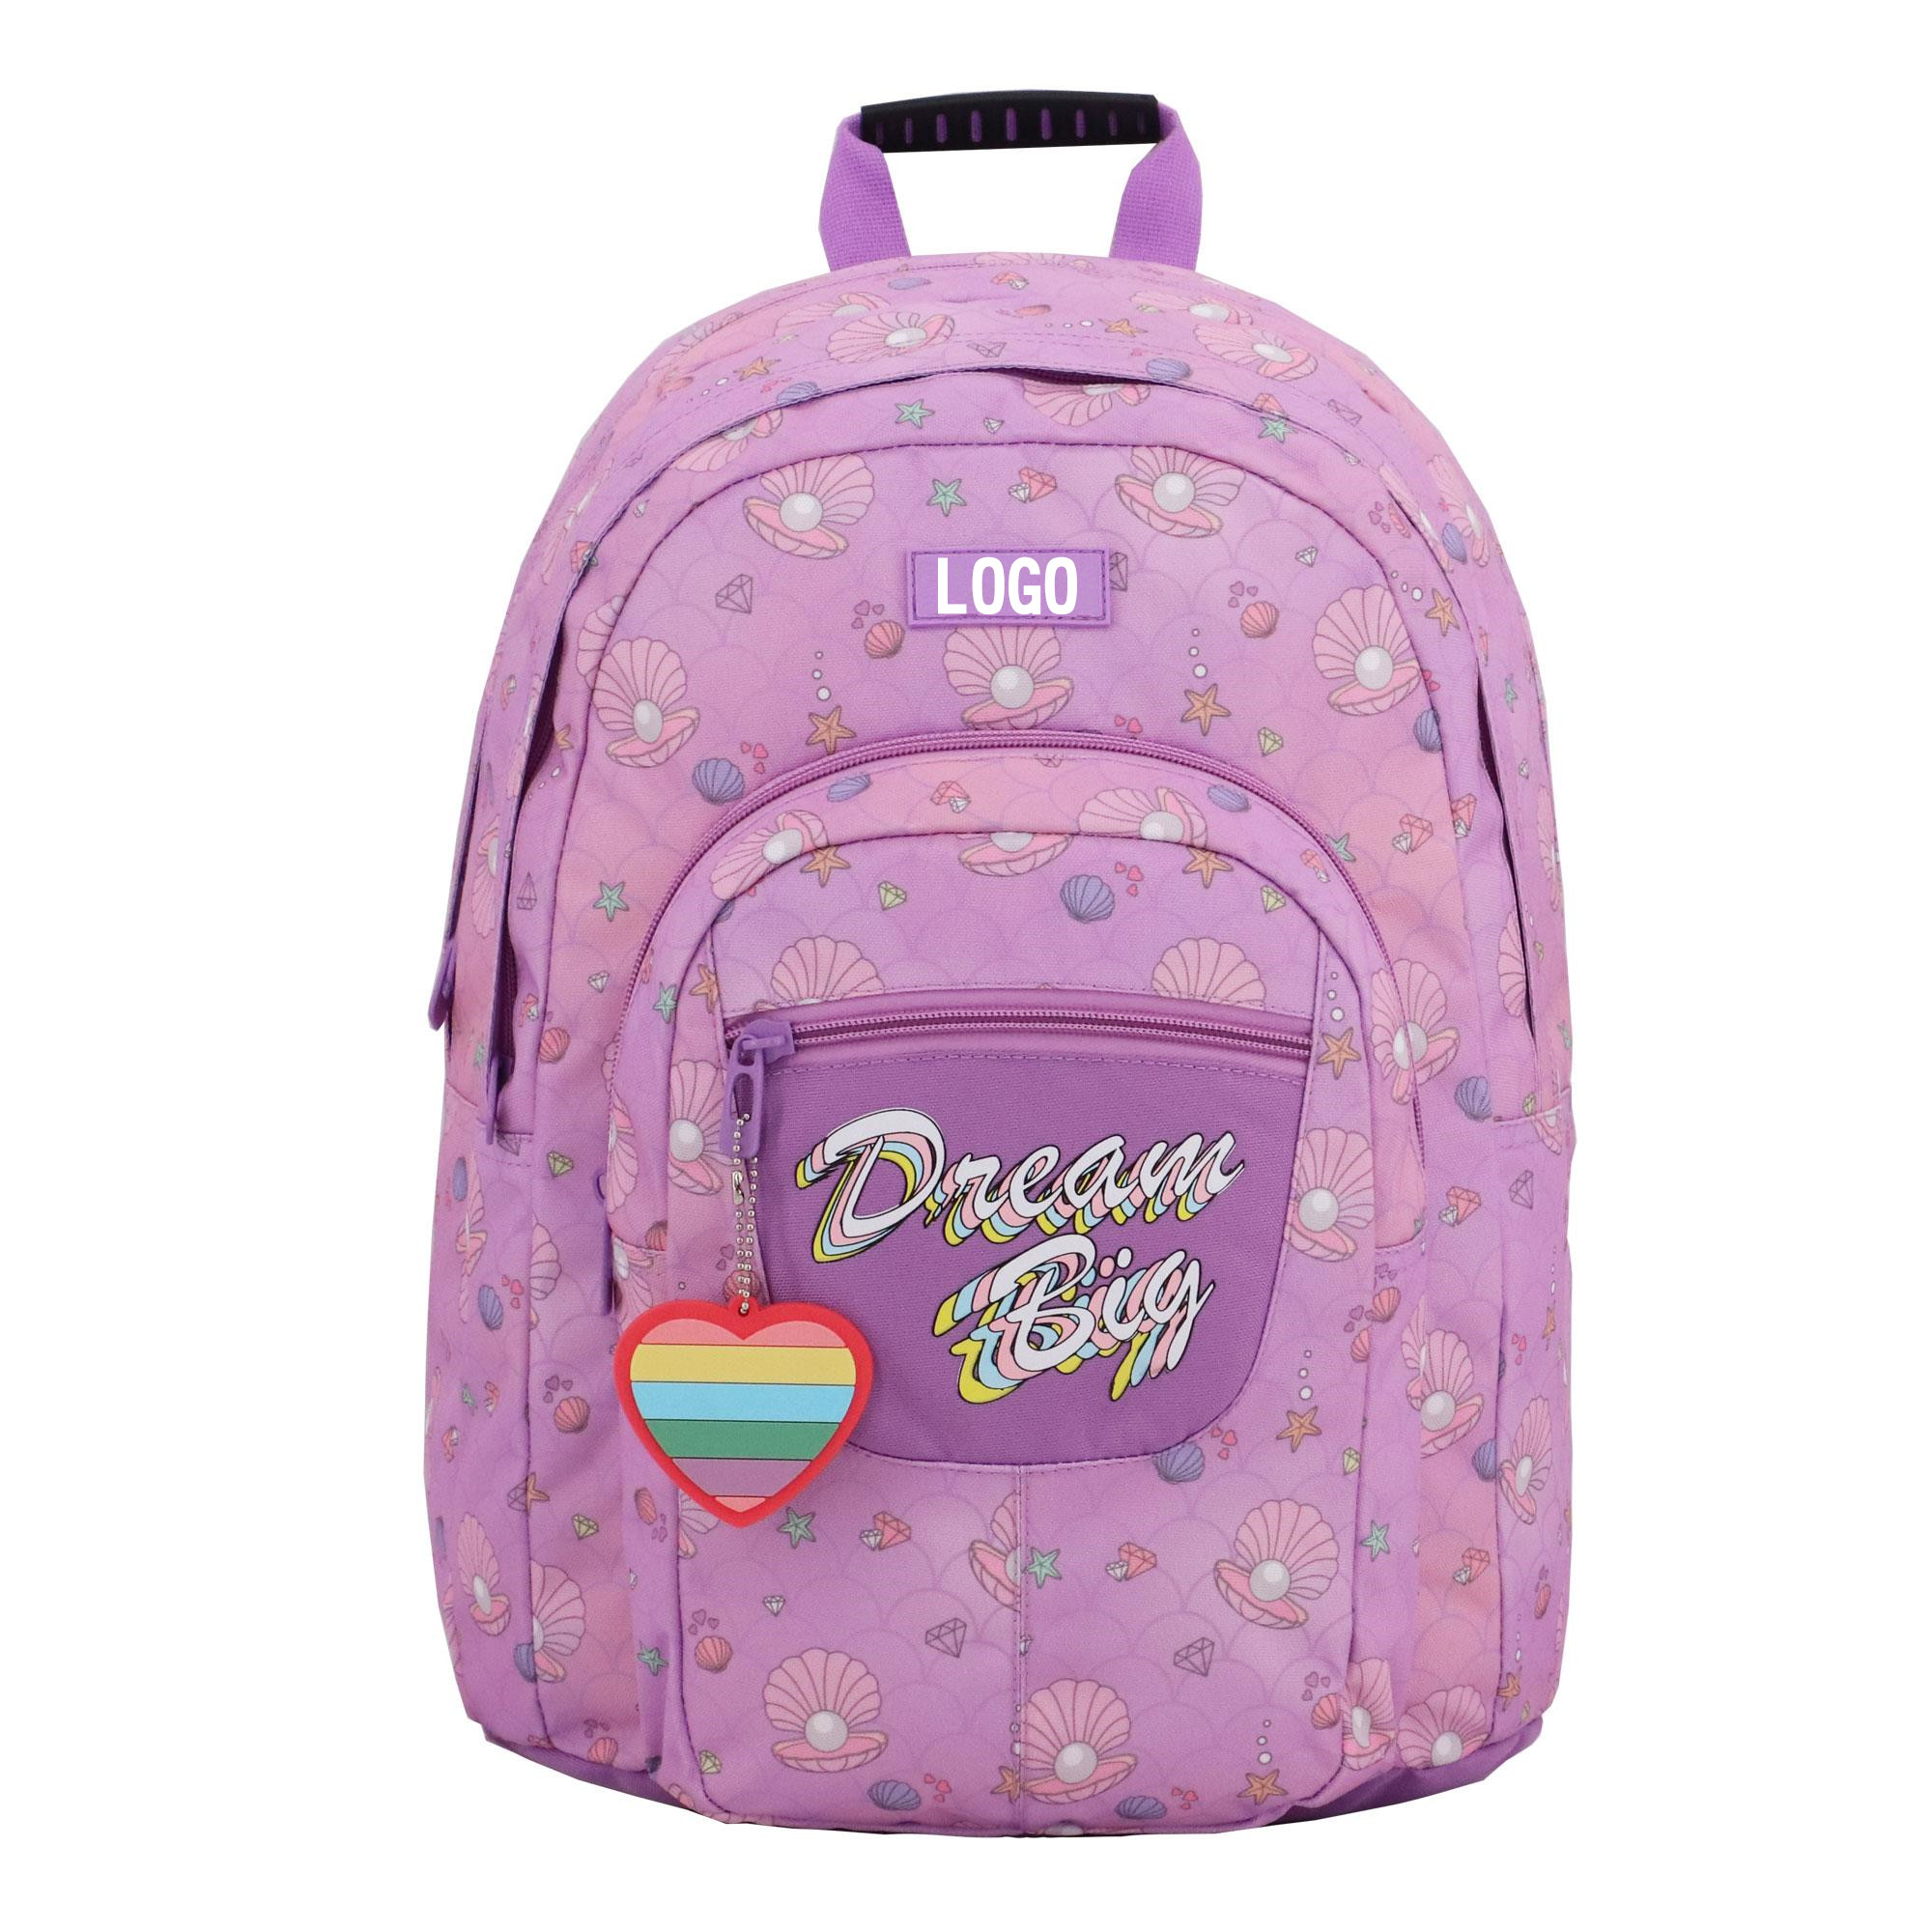 Leisure backpack